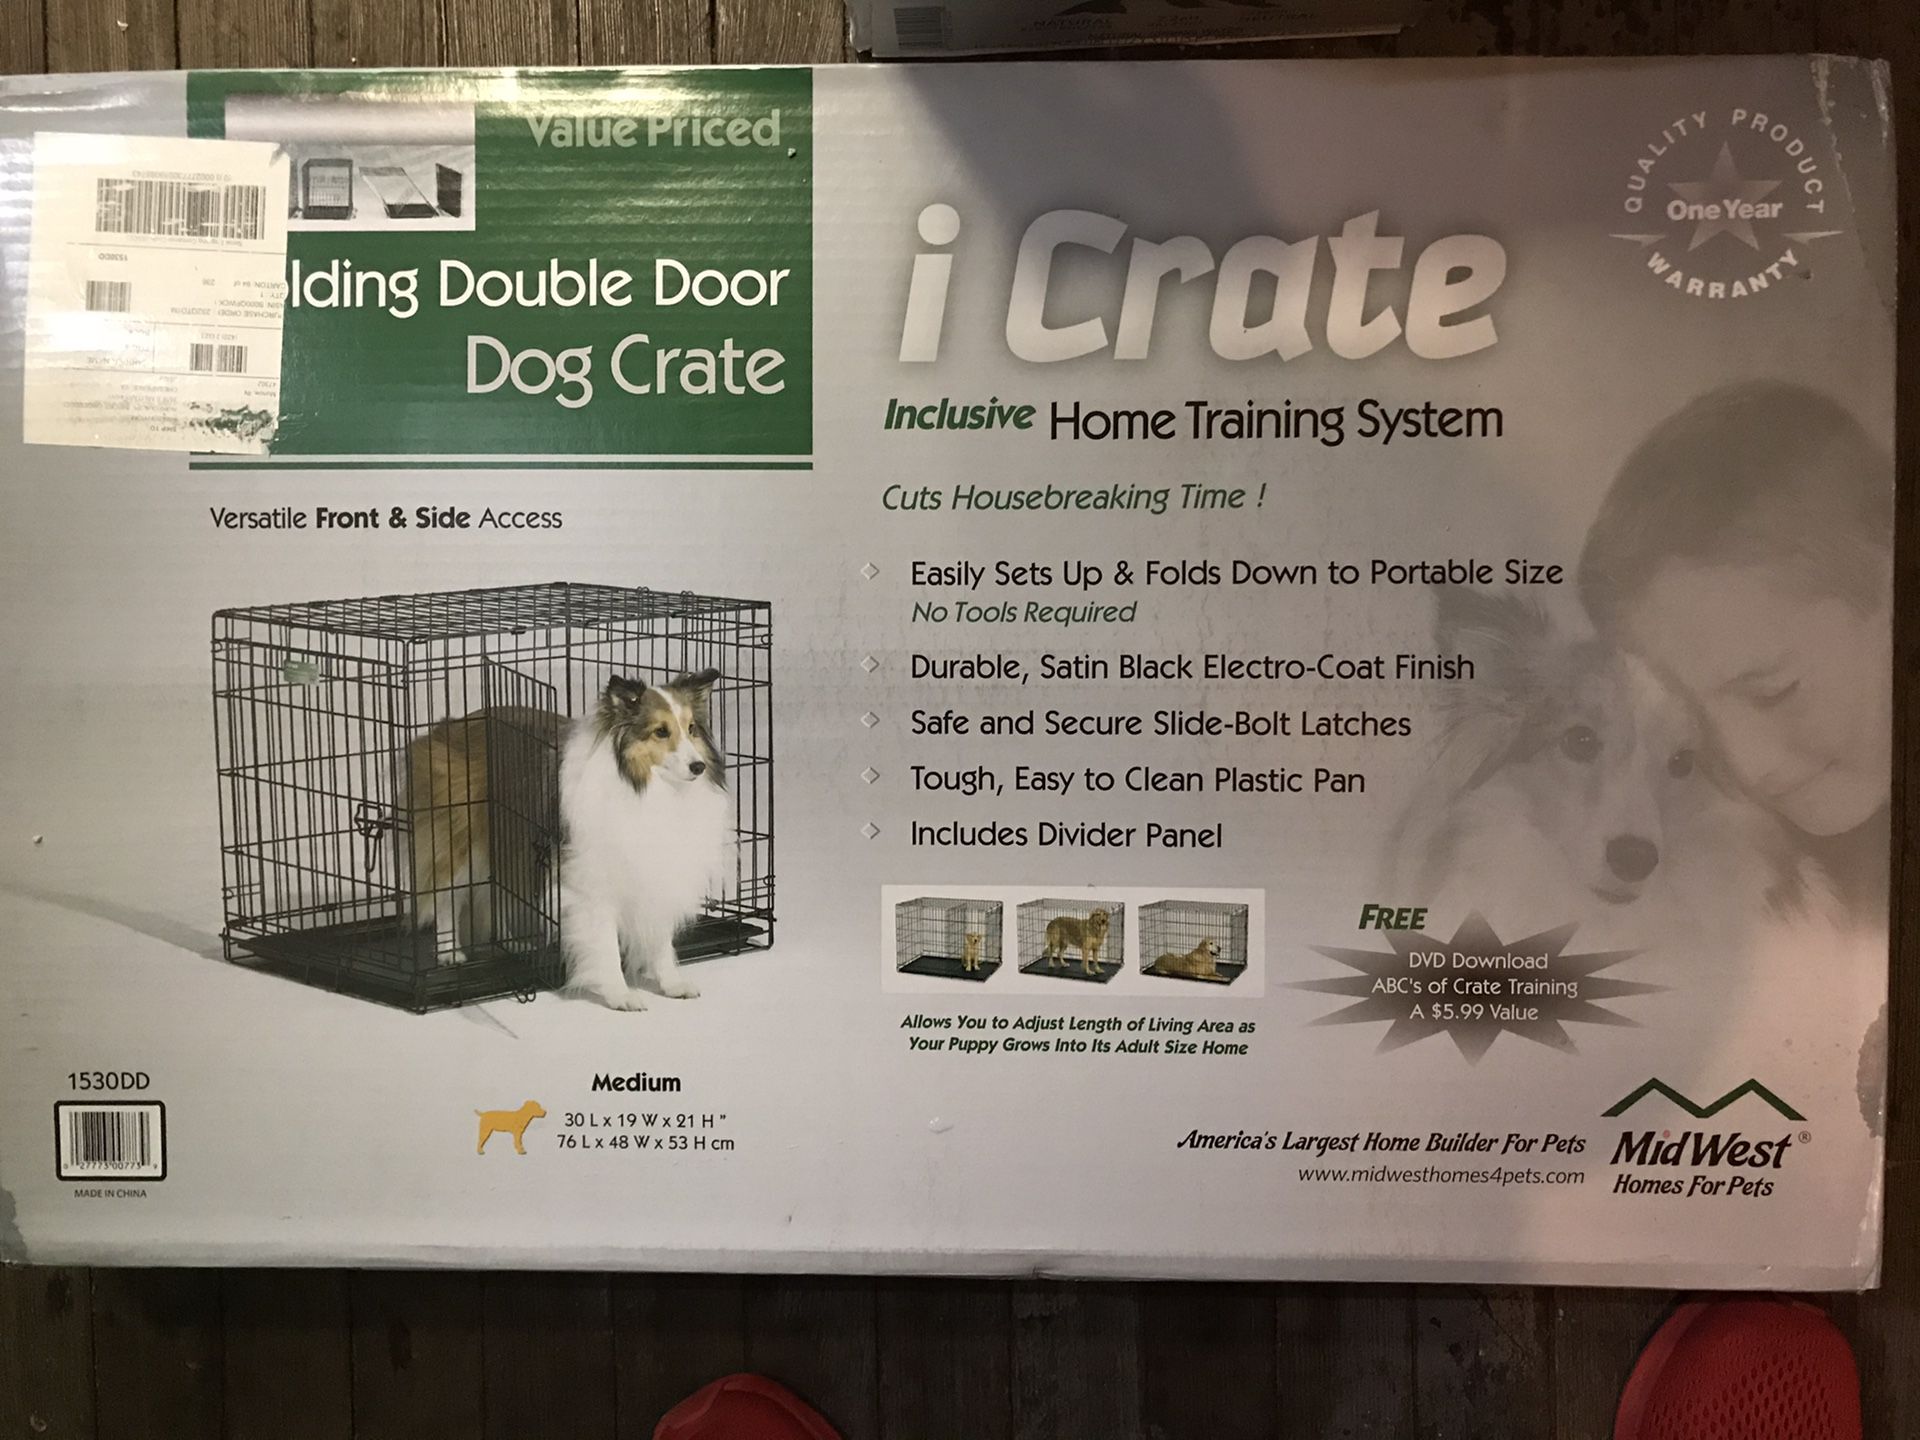 Dog crate —-brand new